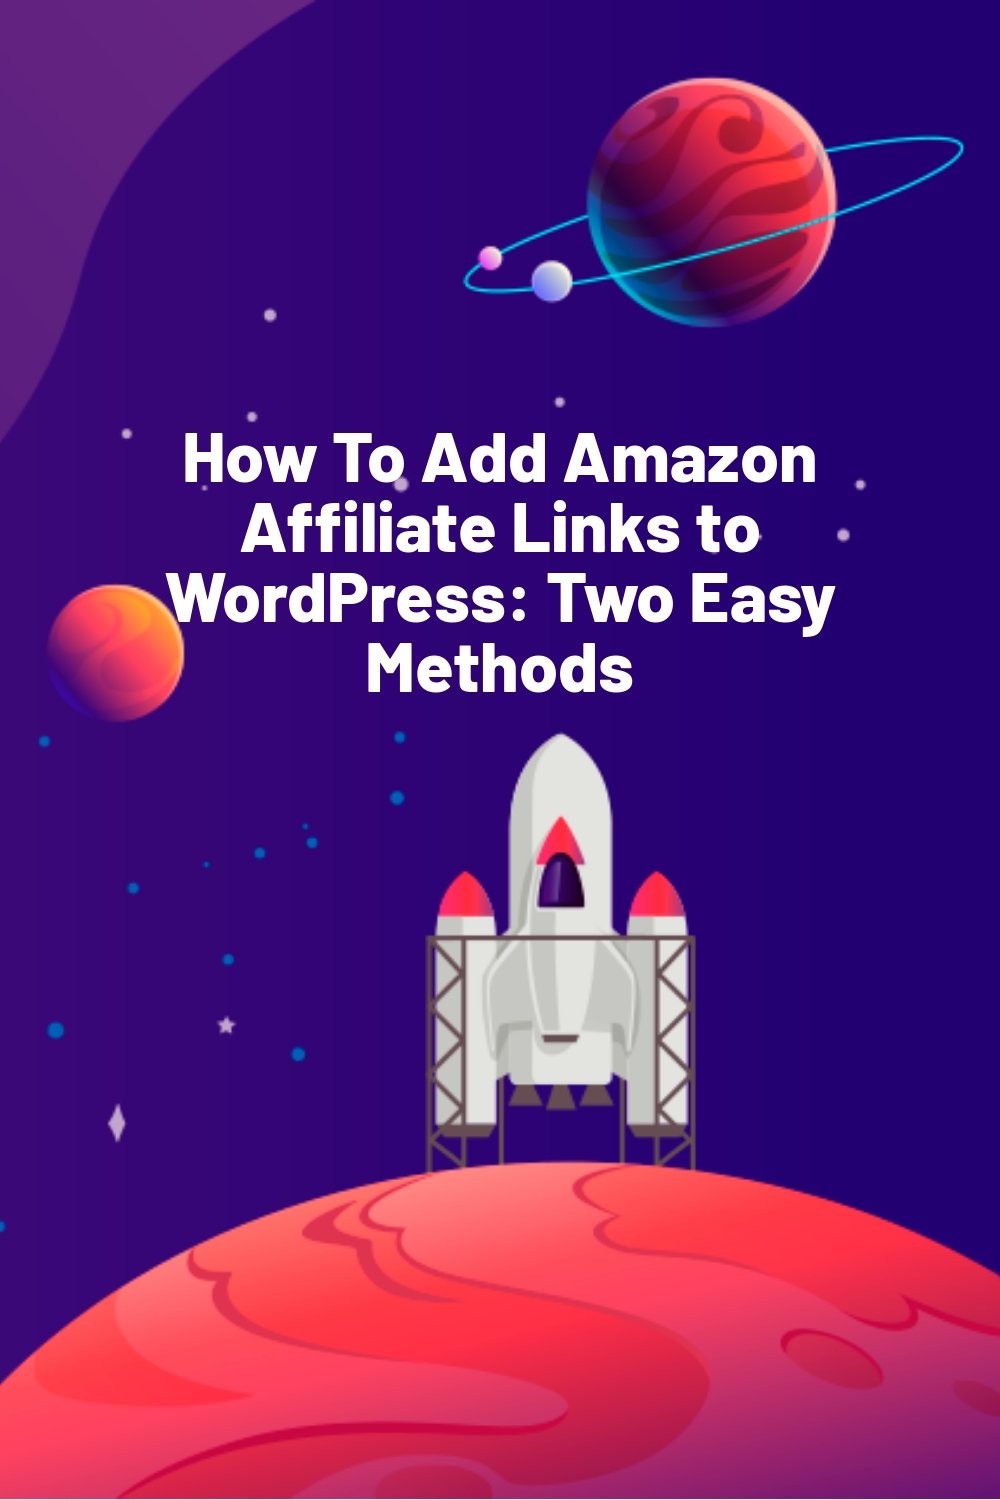 How To Add Amazon Affiliate Links to WordPress: Two Easy Methods